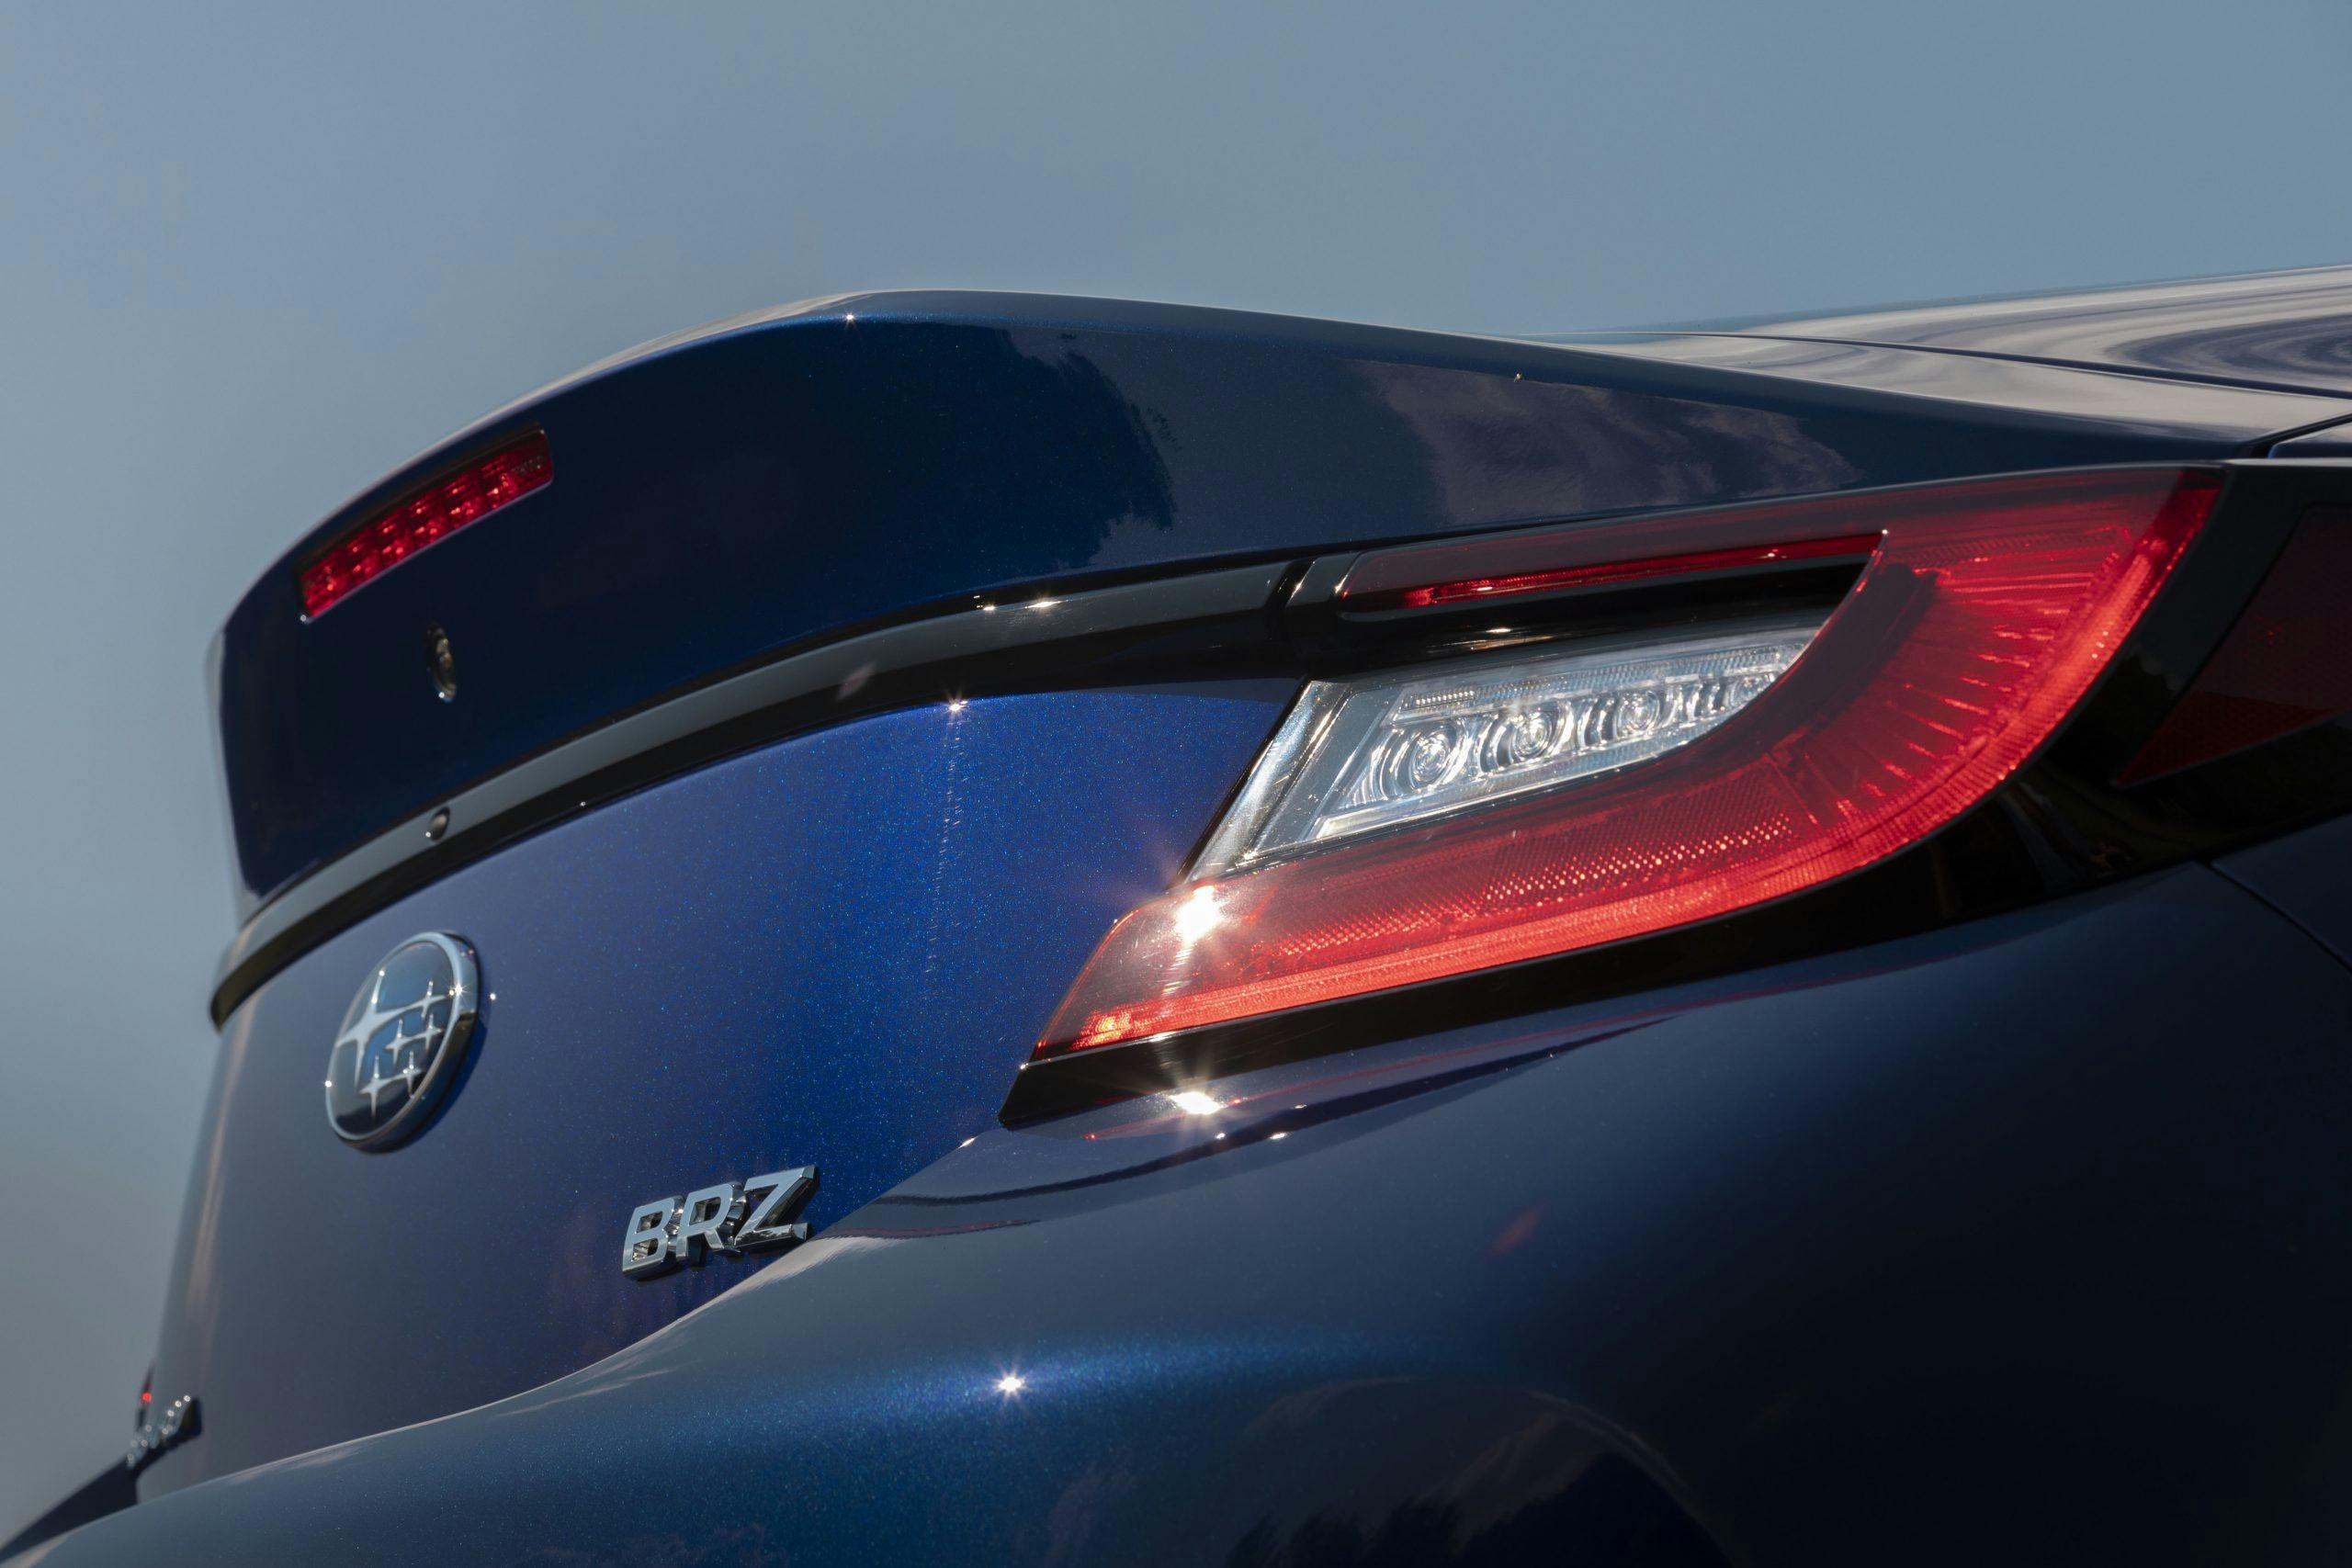 2022 Subaru BRZ rear shape detail